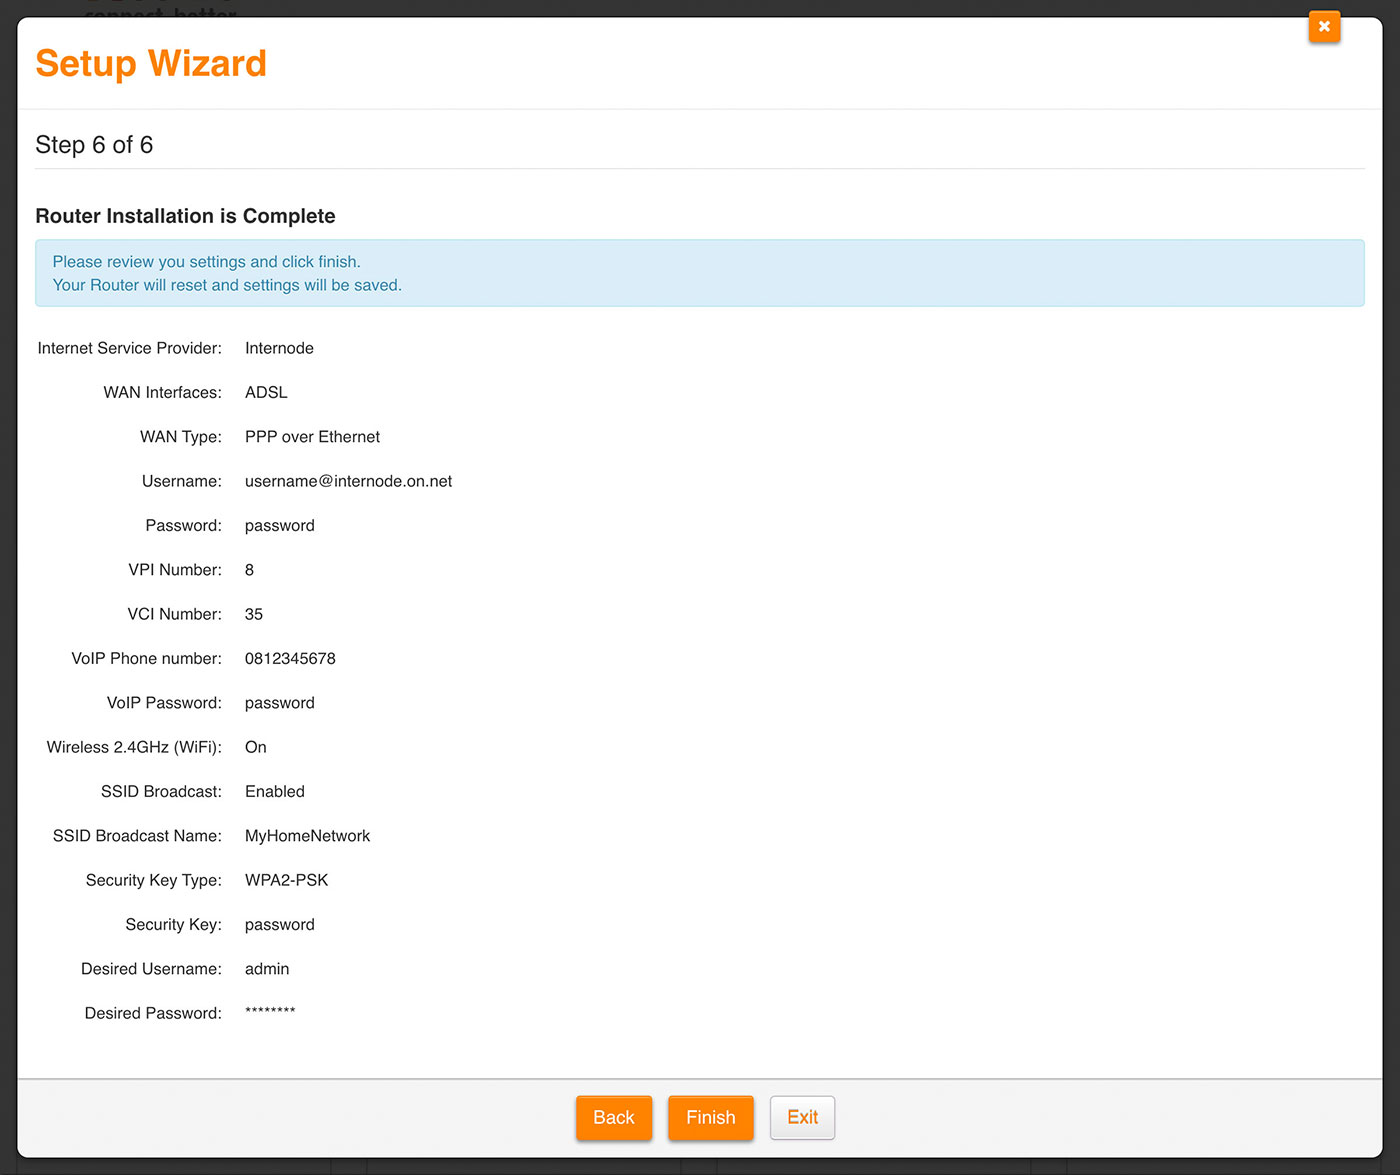 Screenshot: Reviewing settings and finishing the wizard